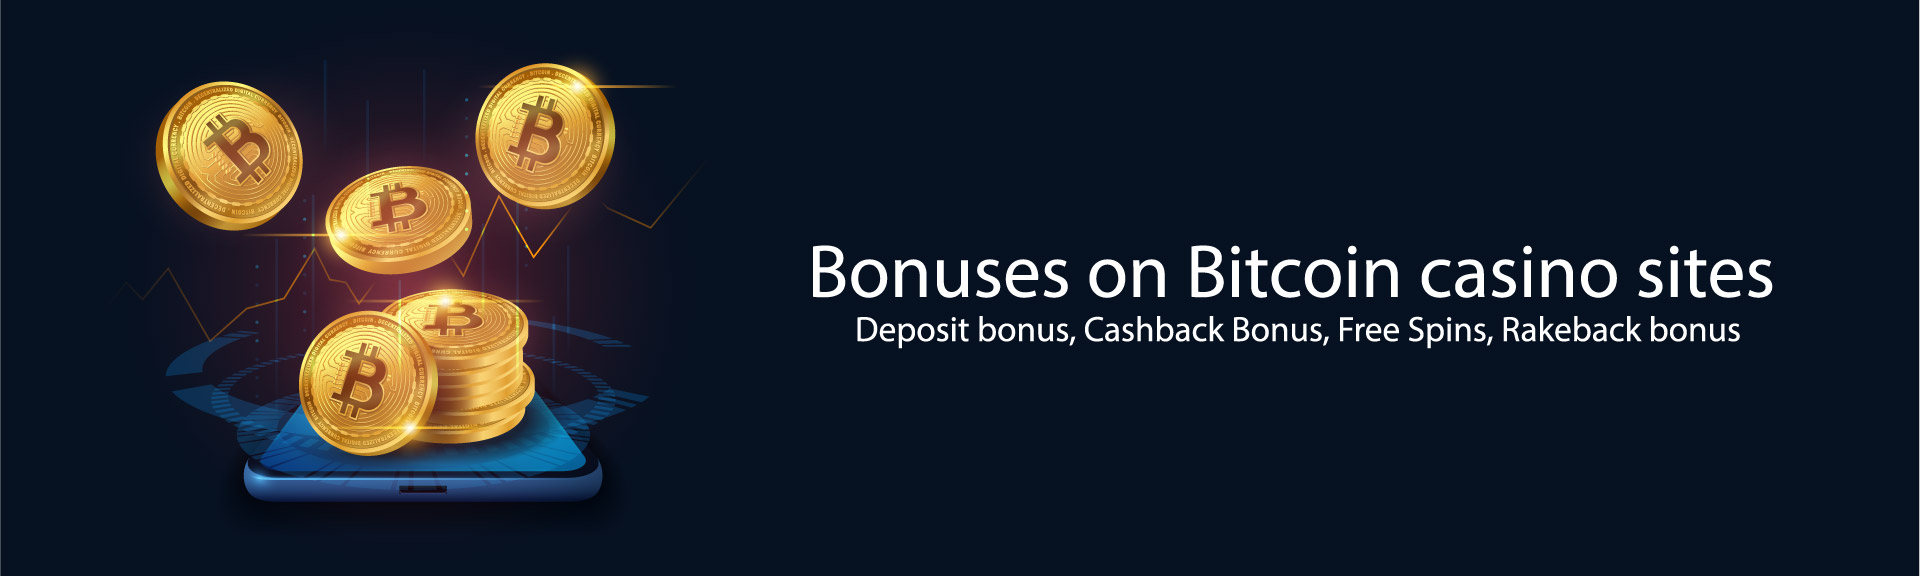 Bonuses on Bitcoin casinos